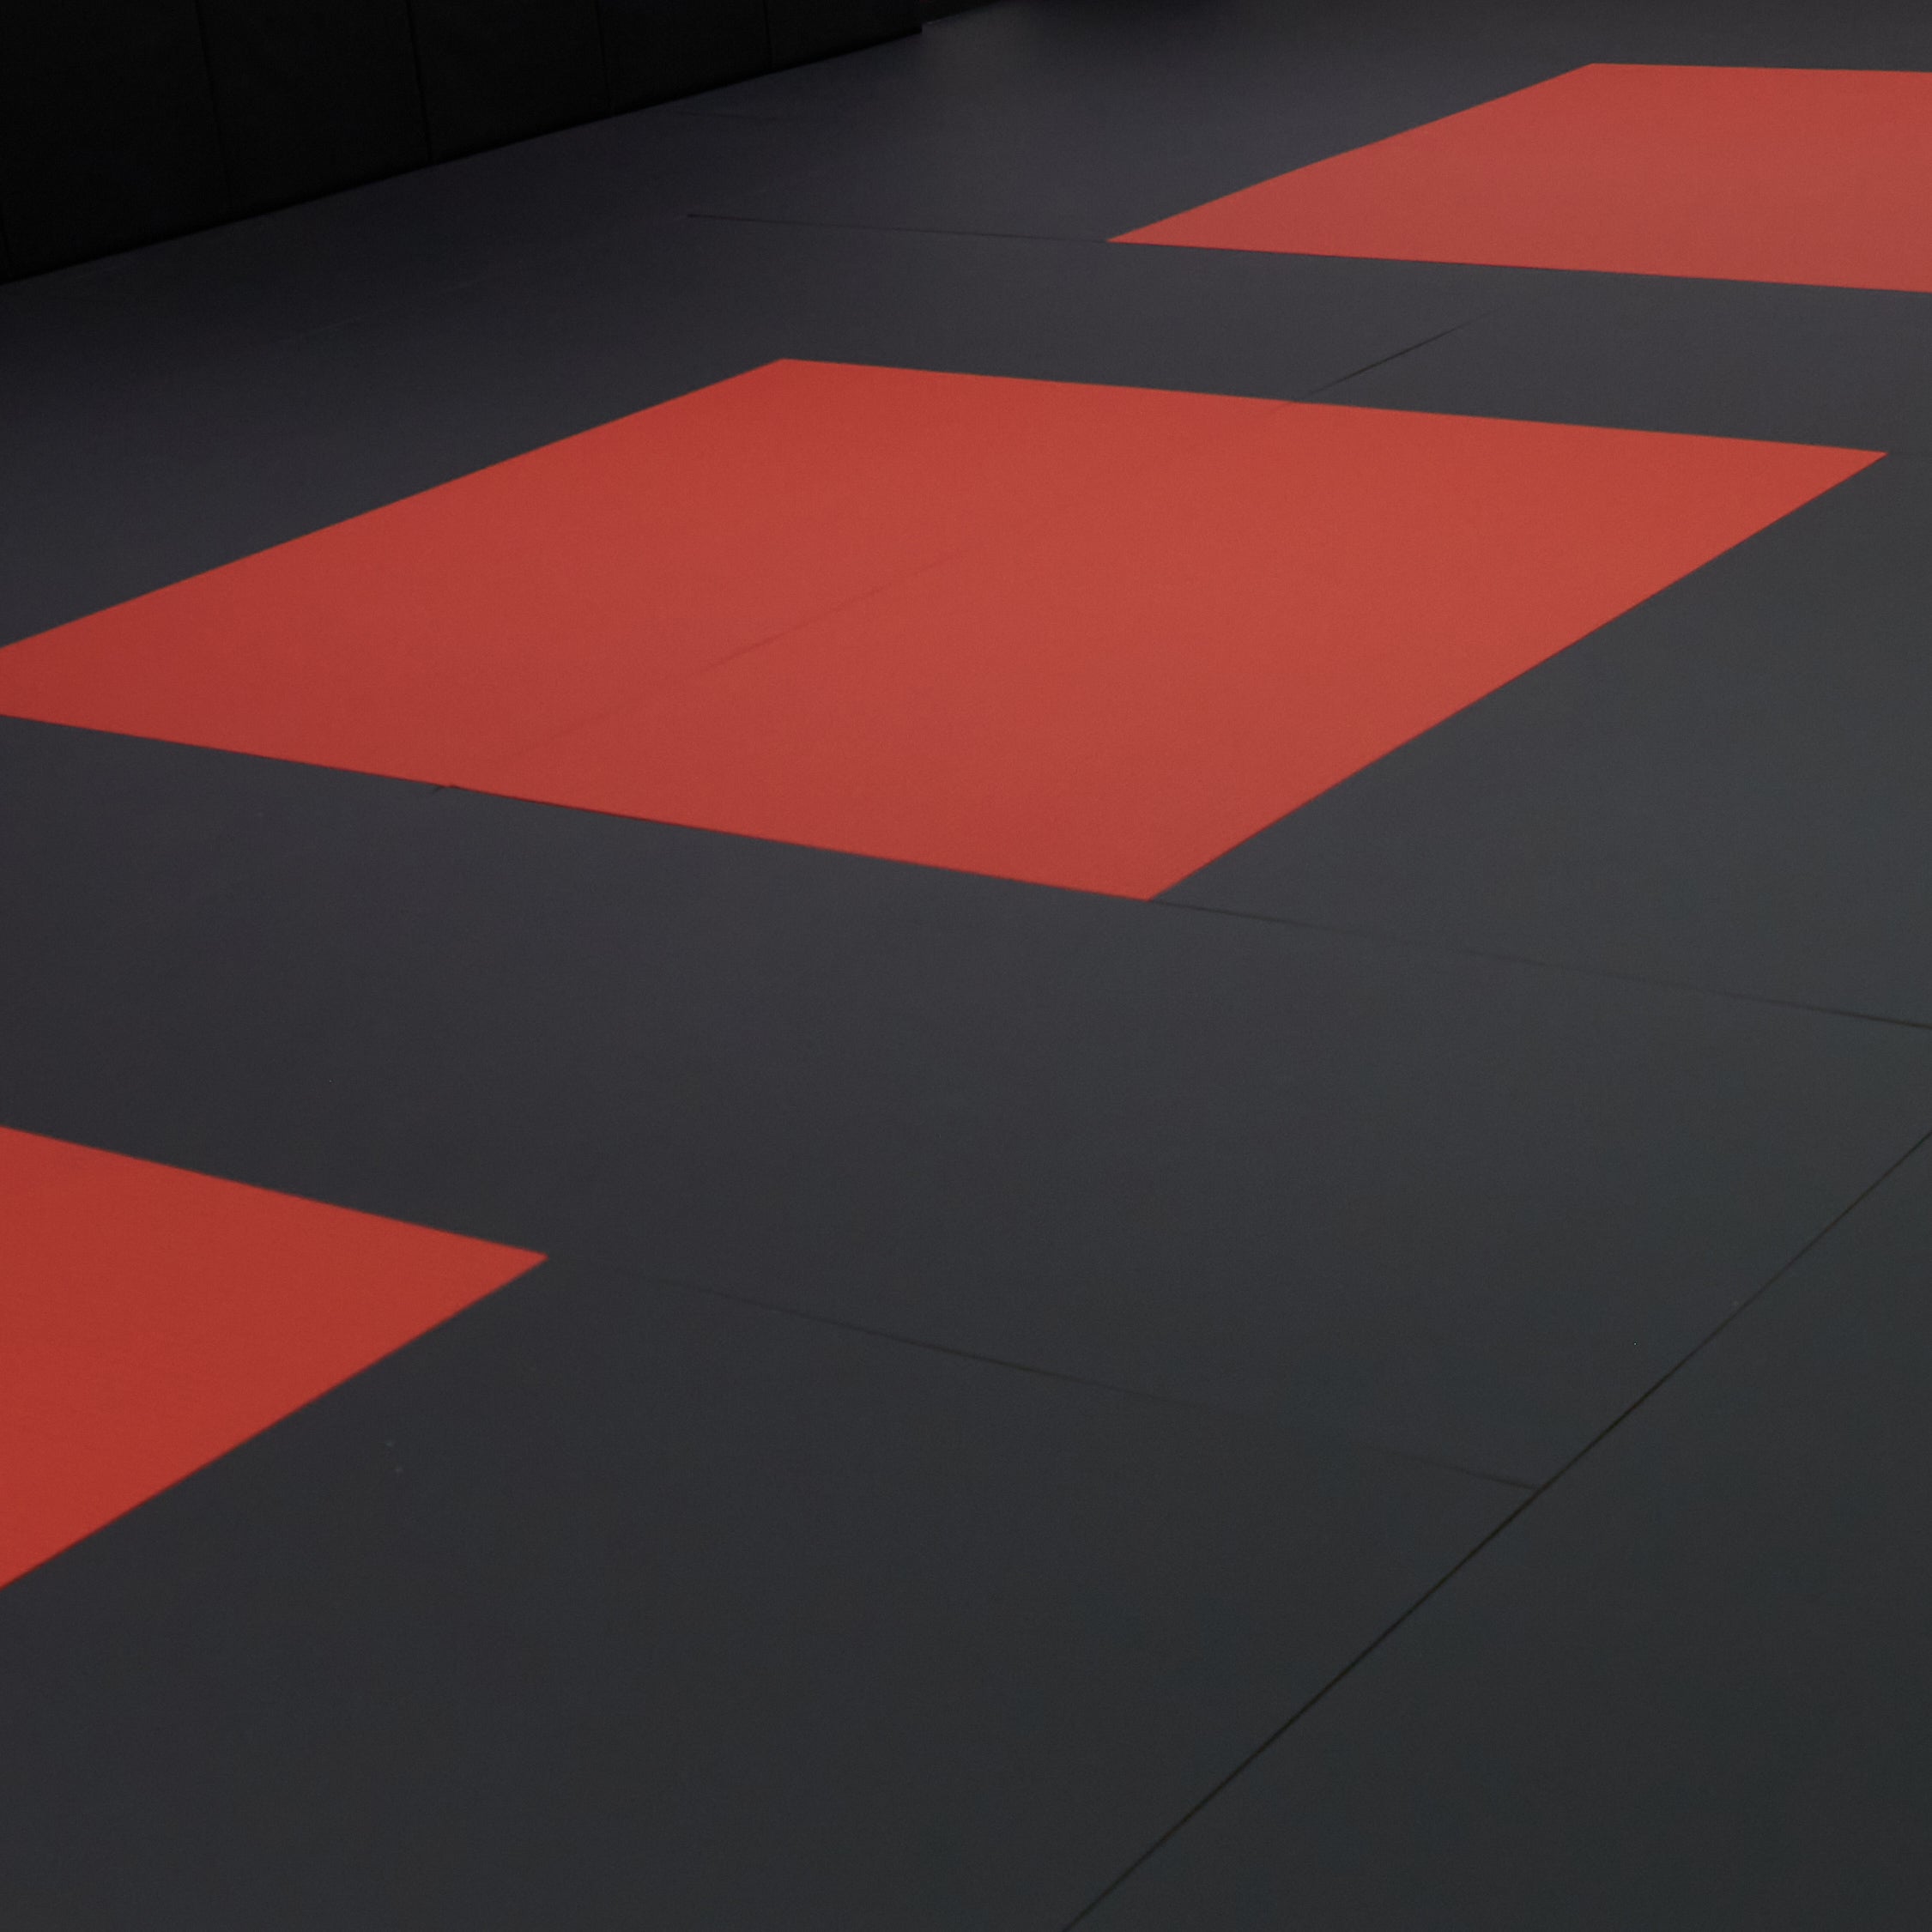 tile mats for martial arts or gym flooring